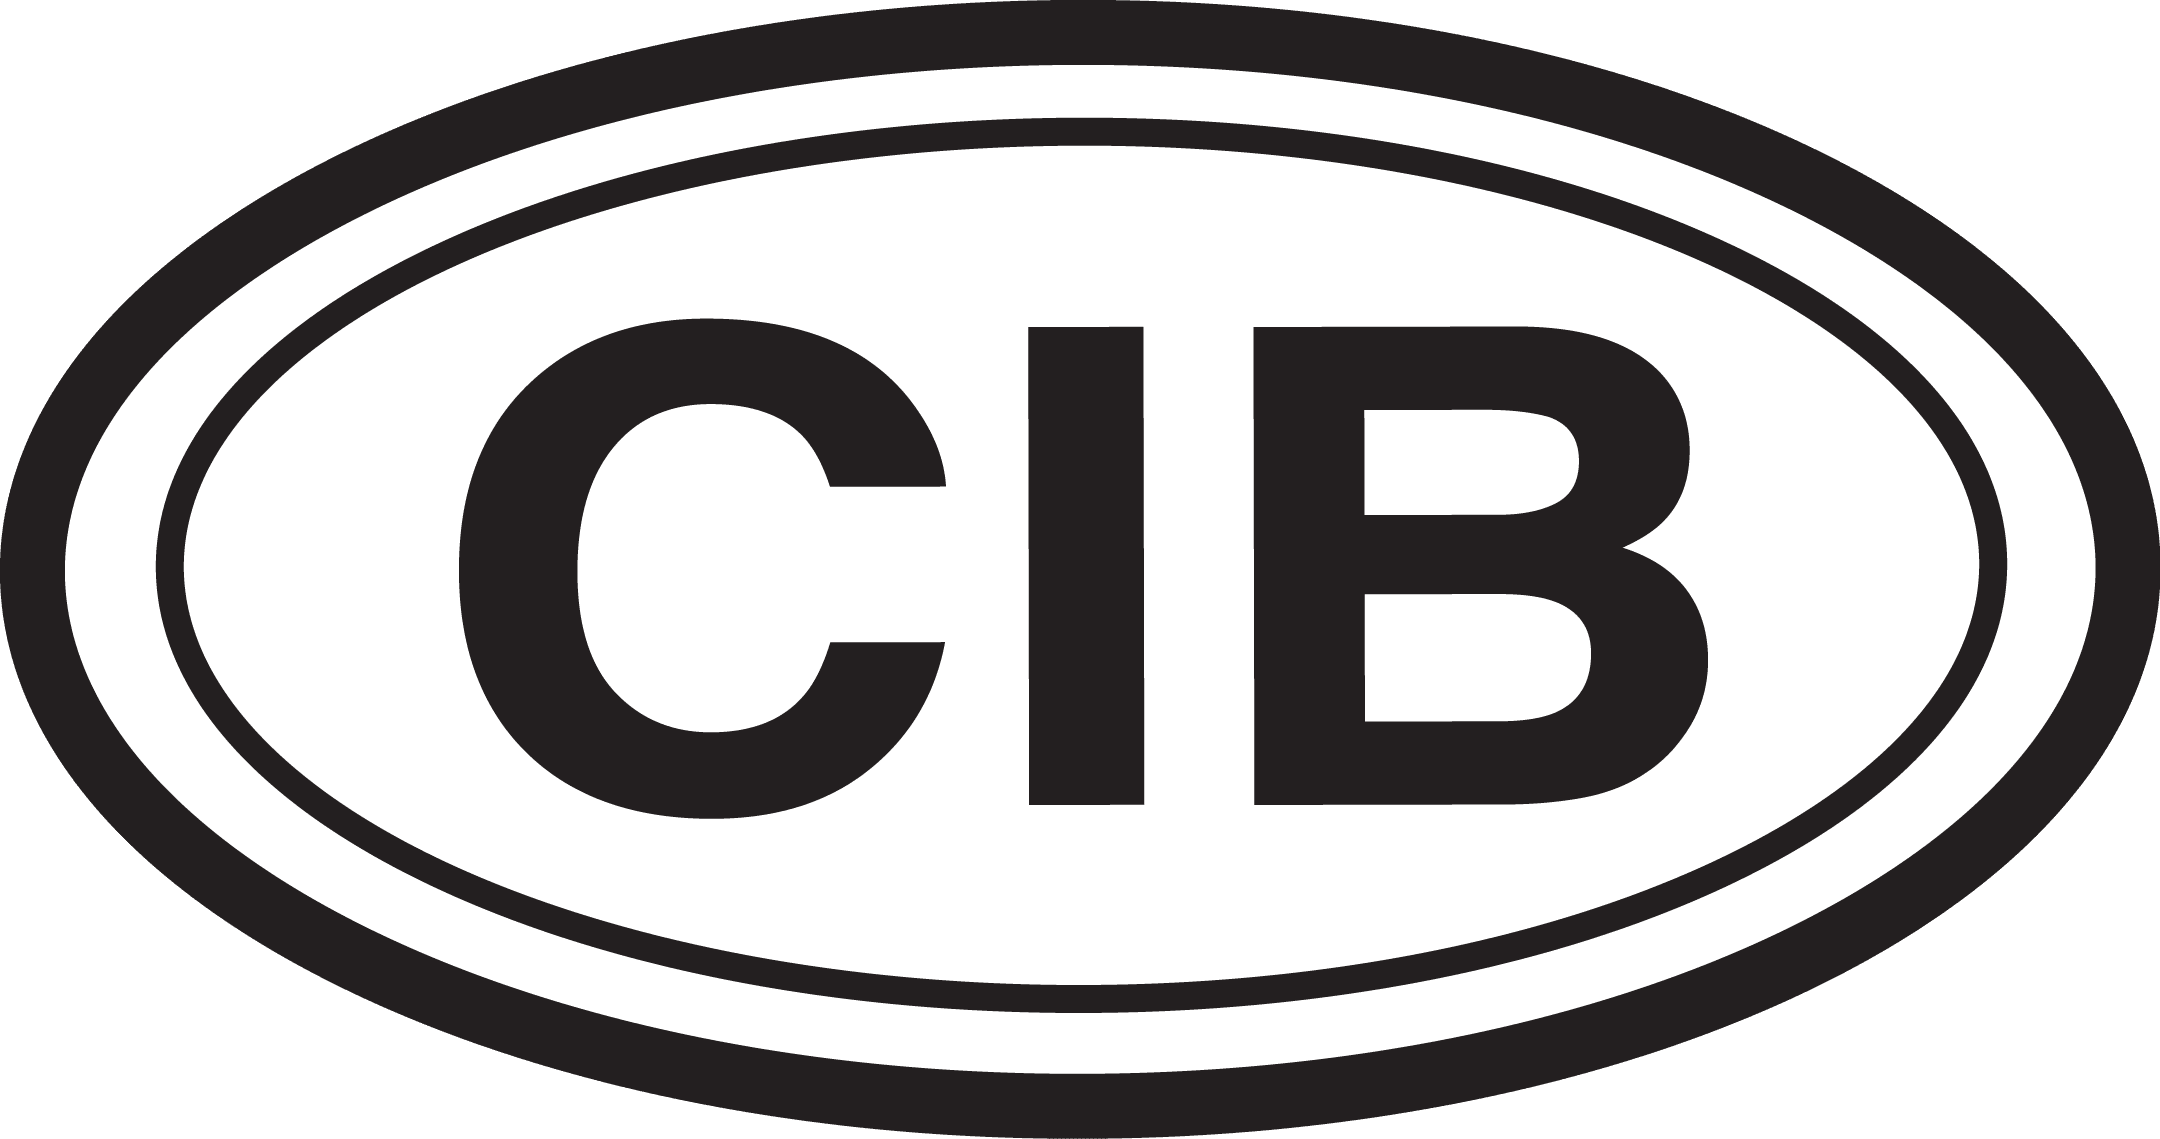 CIB Sticker LOGO (1)